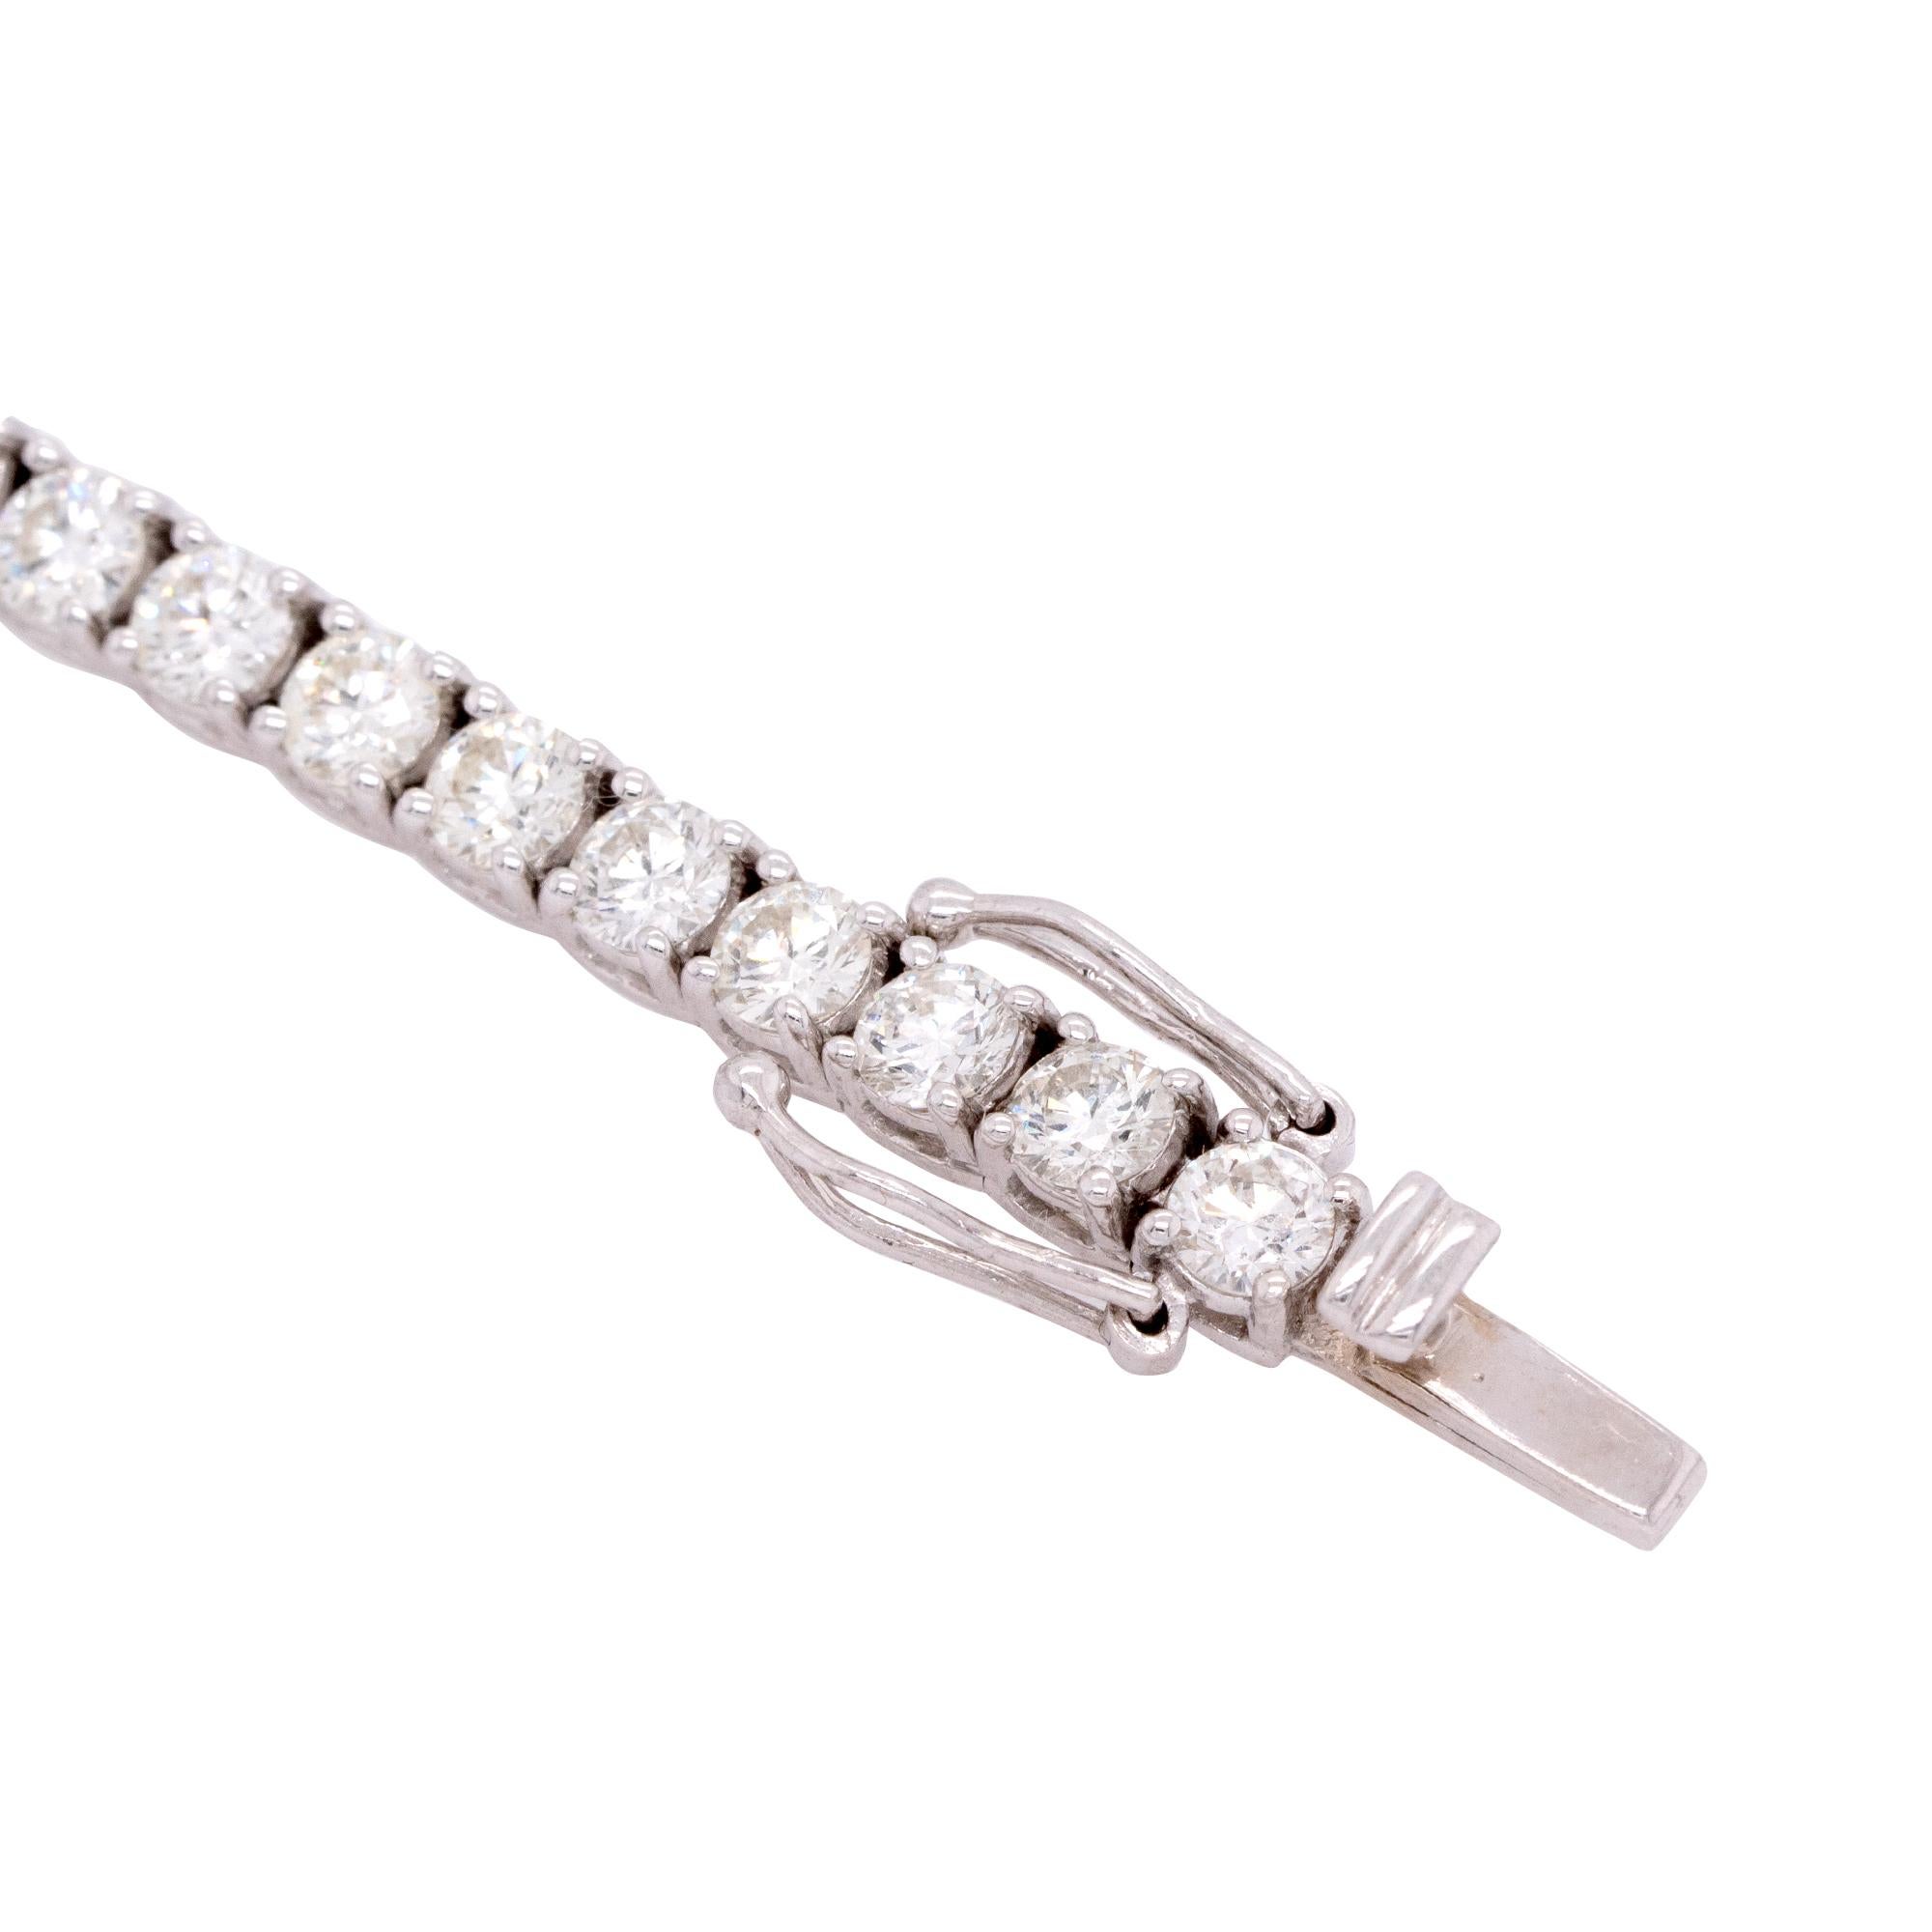 7.03 Carat Round Cut Natural Diamond Tennis Bracelet For Sale 2